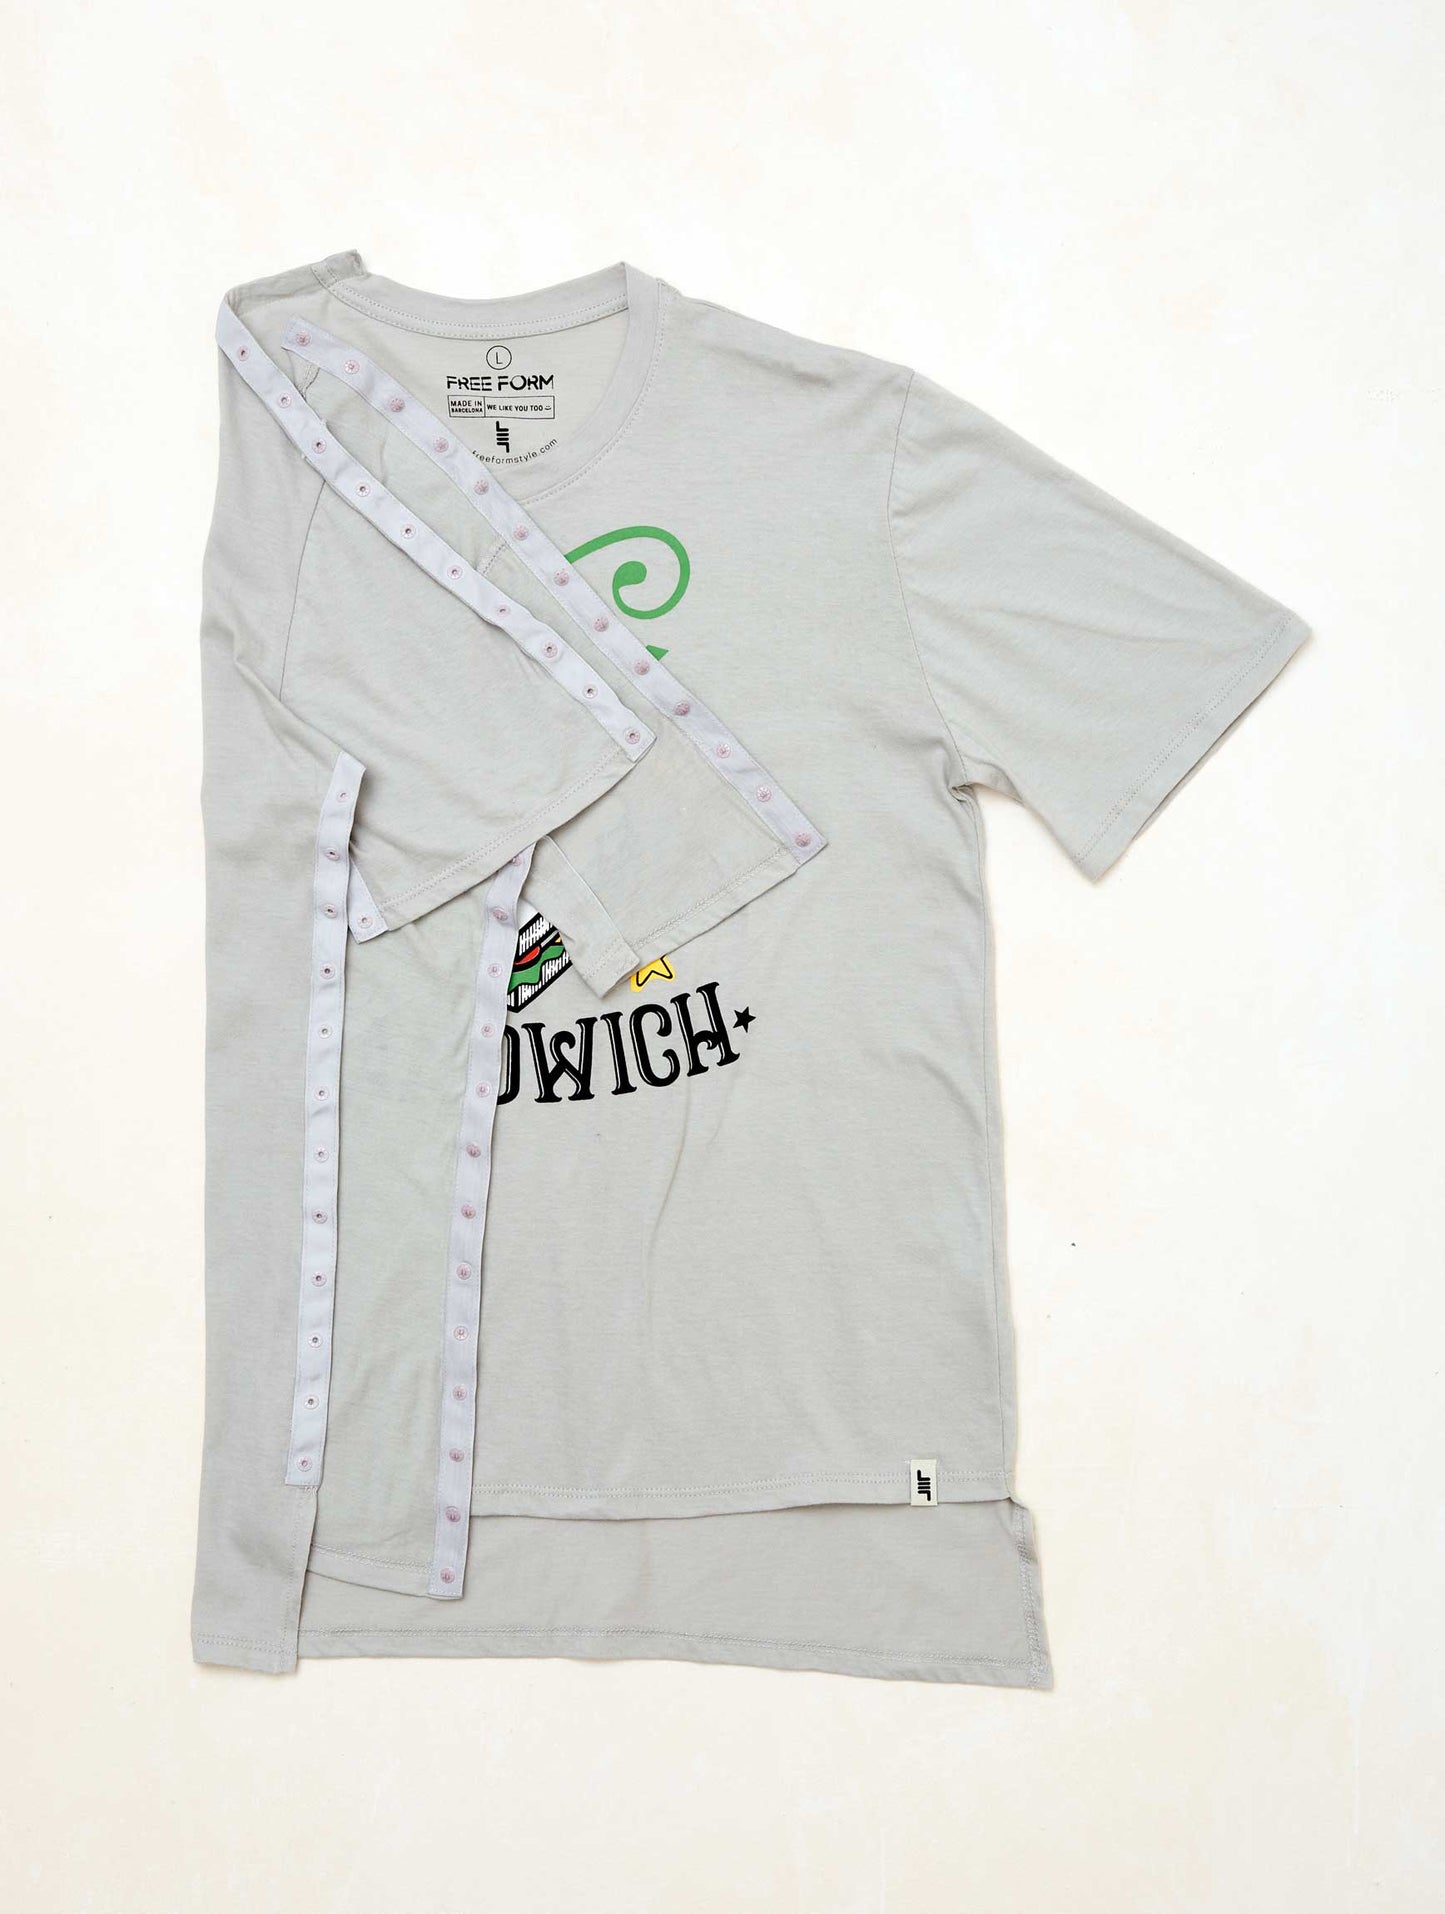 Camiseta manga corta "Sandwich" color gris